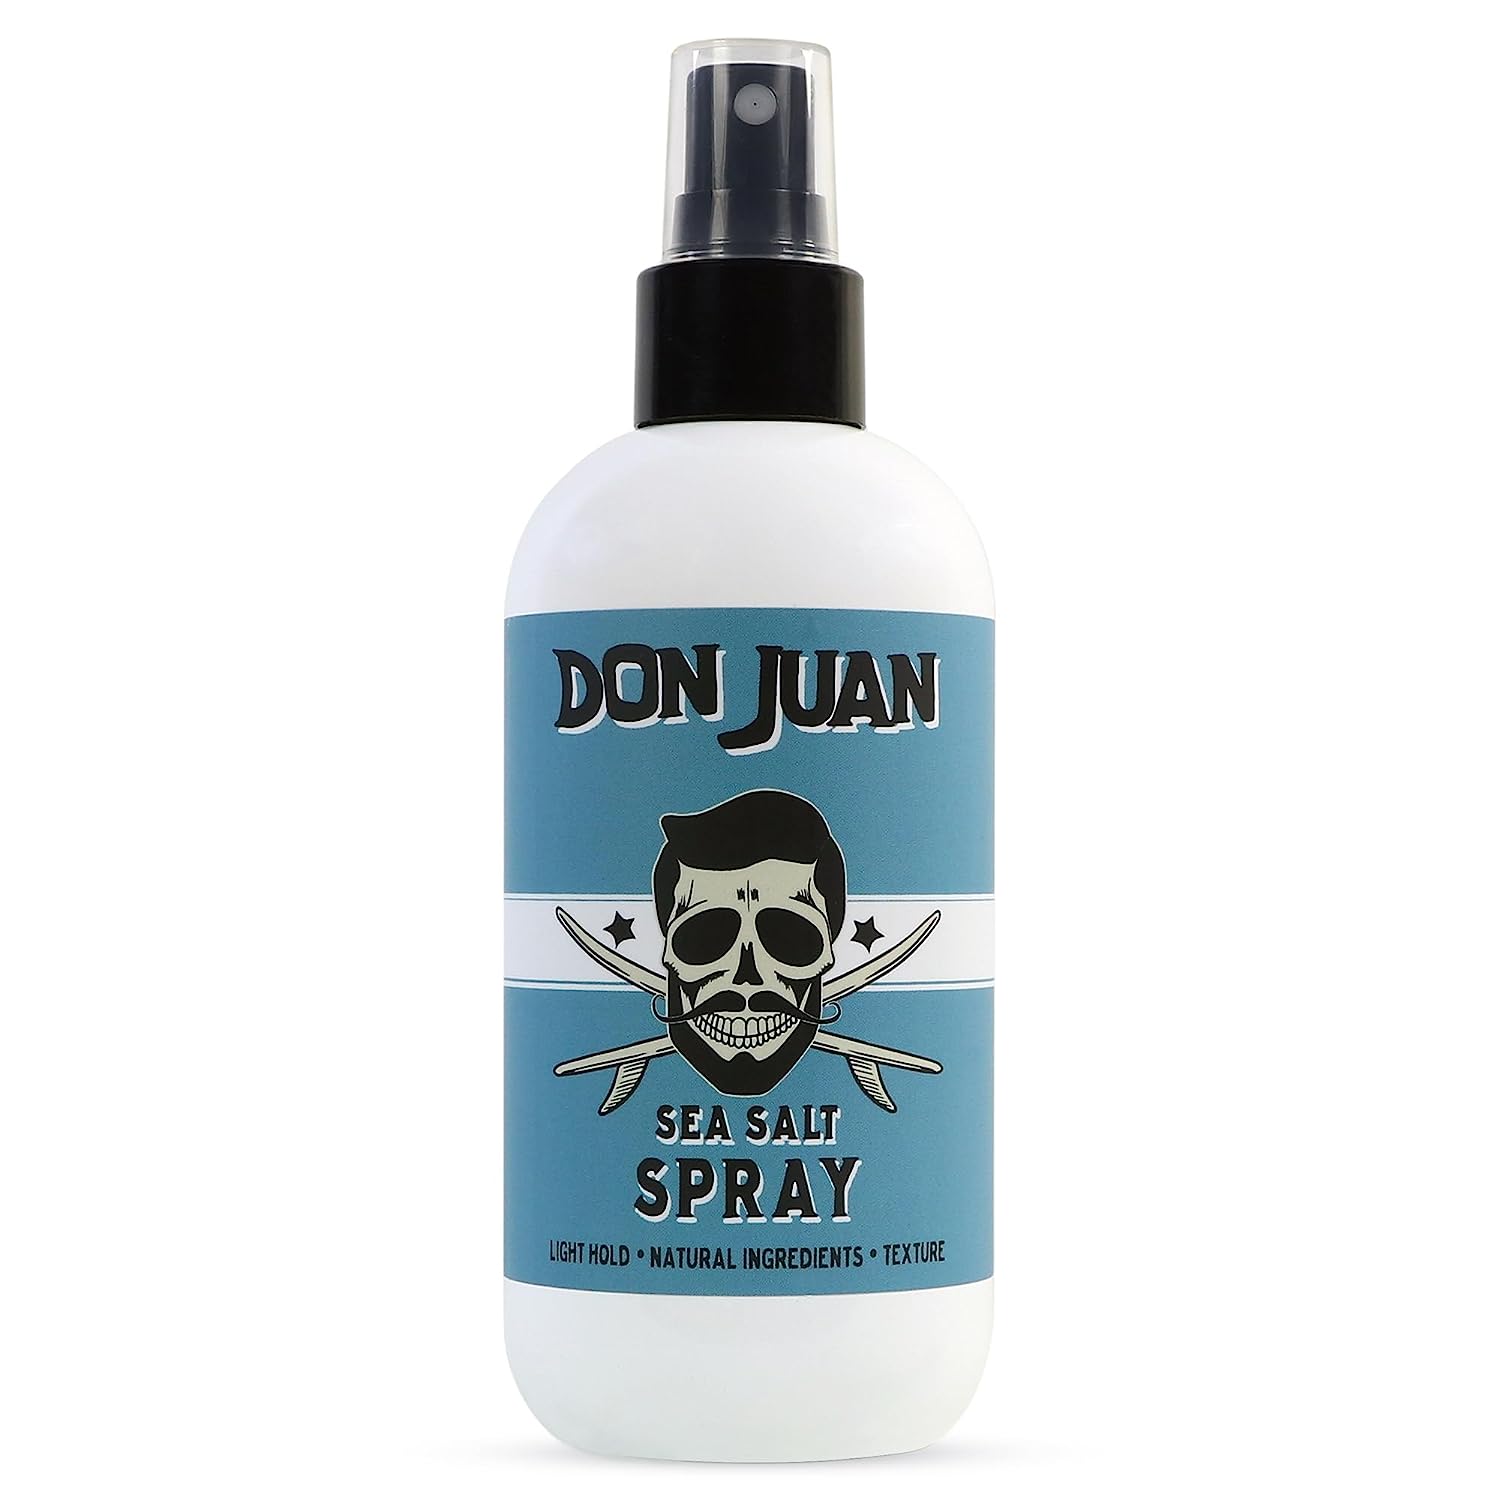 Don Juan Sea Salt Hair Styling Surf Spray | Light Hold [...]